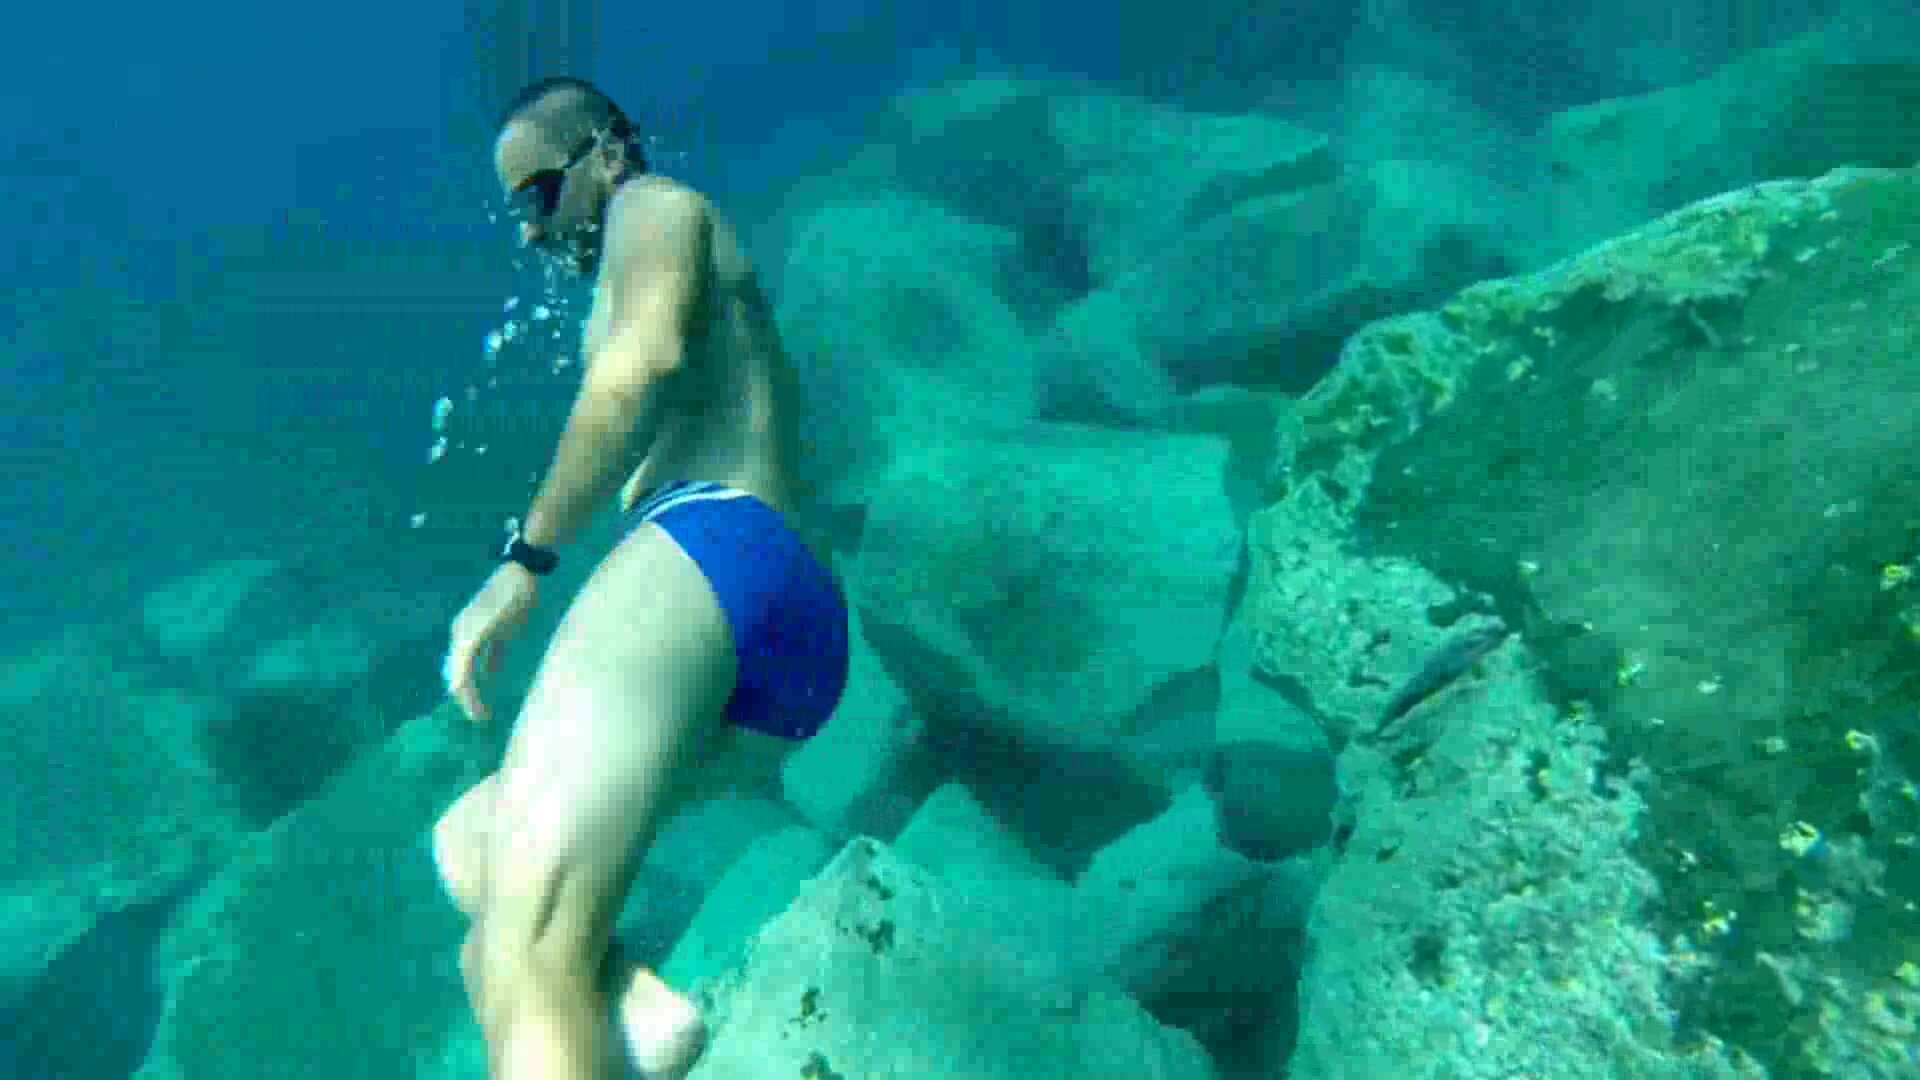 Cute guy underwater in blue speedo